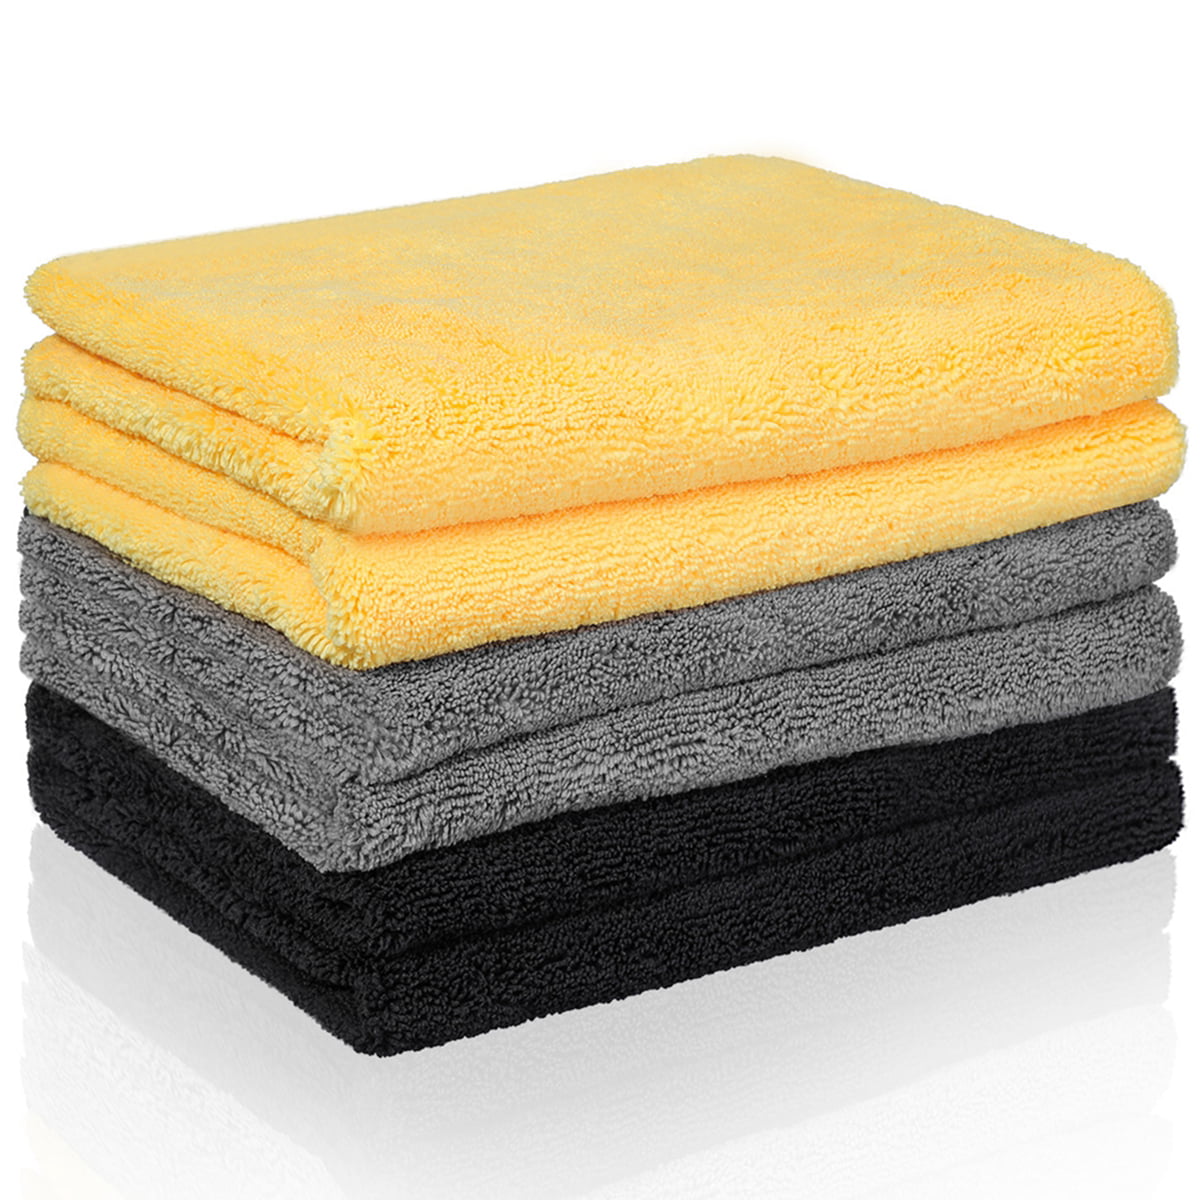 Car Wash SUV Home Microfiber Cleaning Cloths Ultra Soft Buffing Wax Polish Towel 